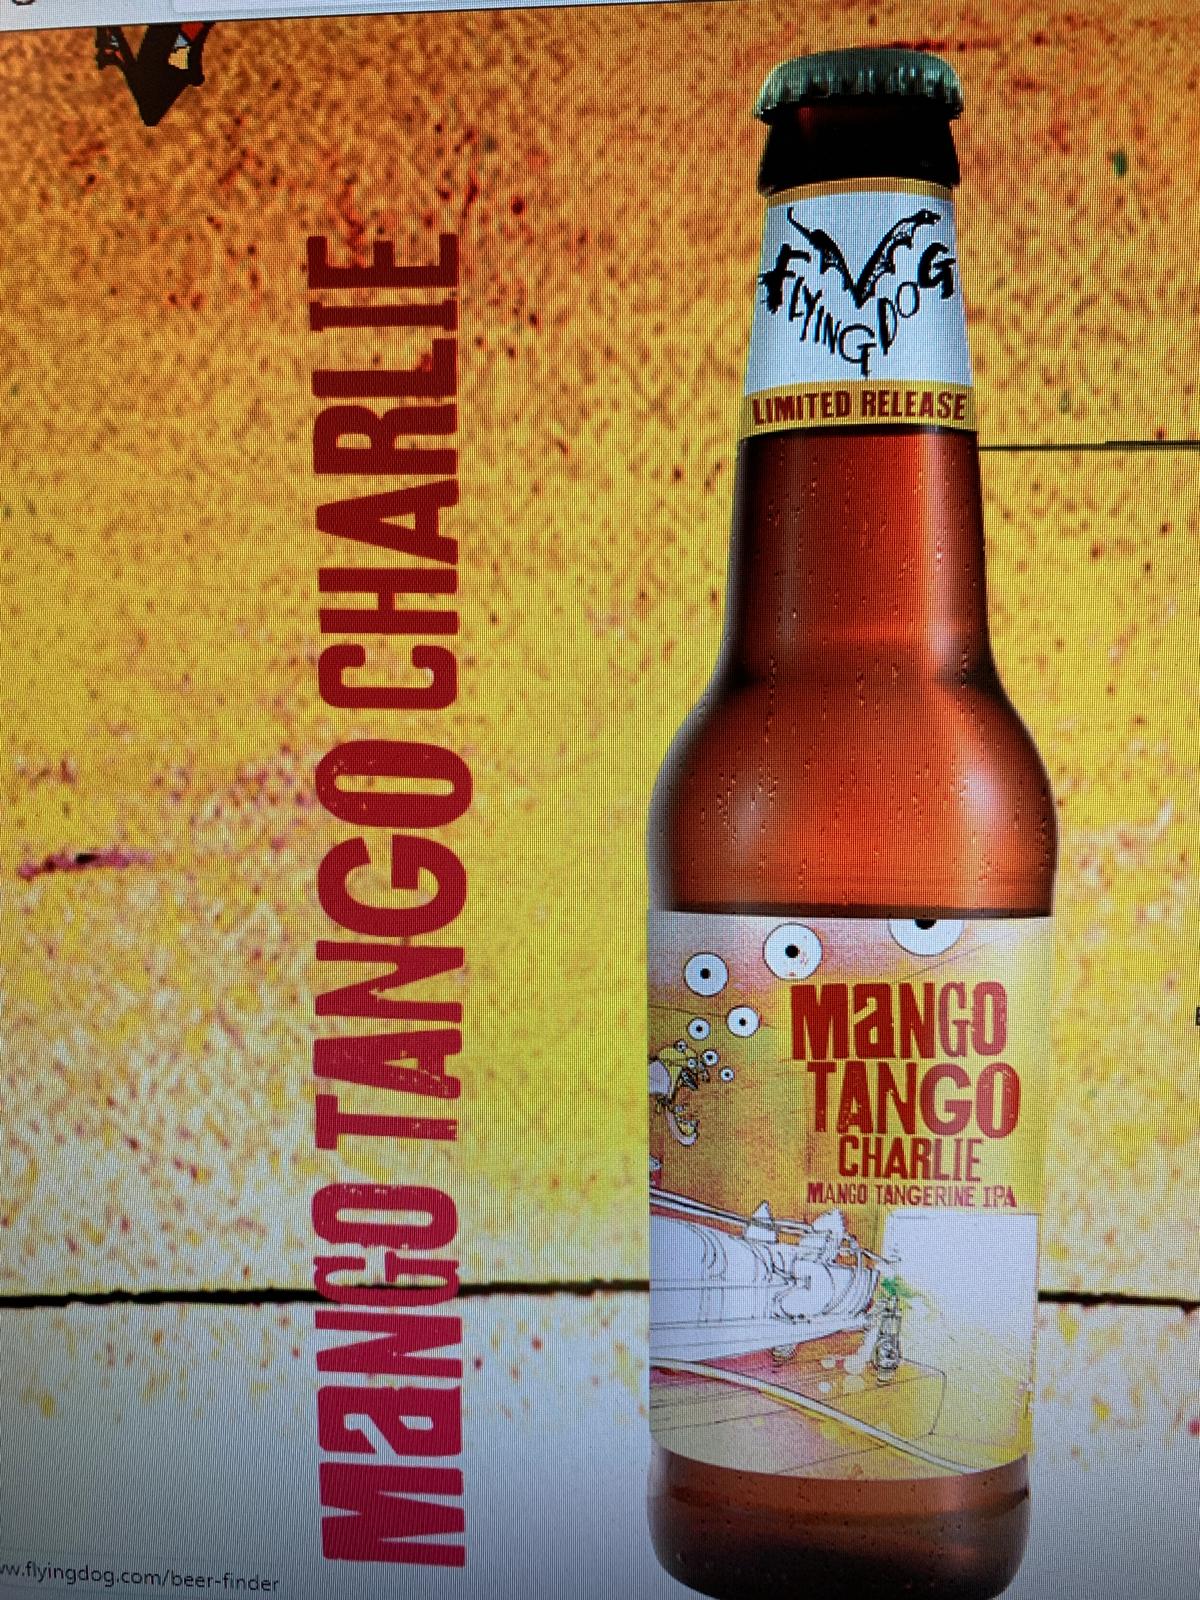 Mango Tango Charlie